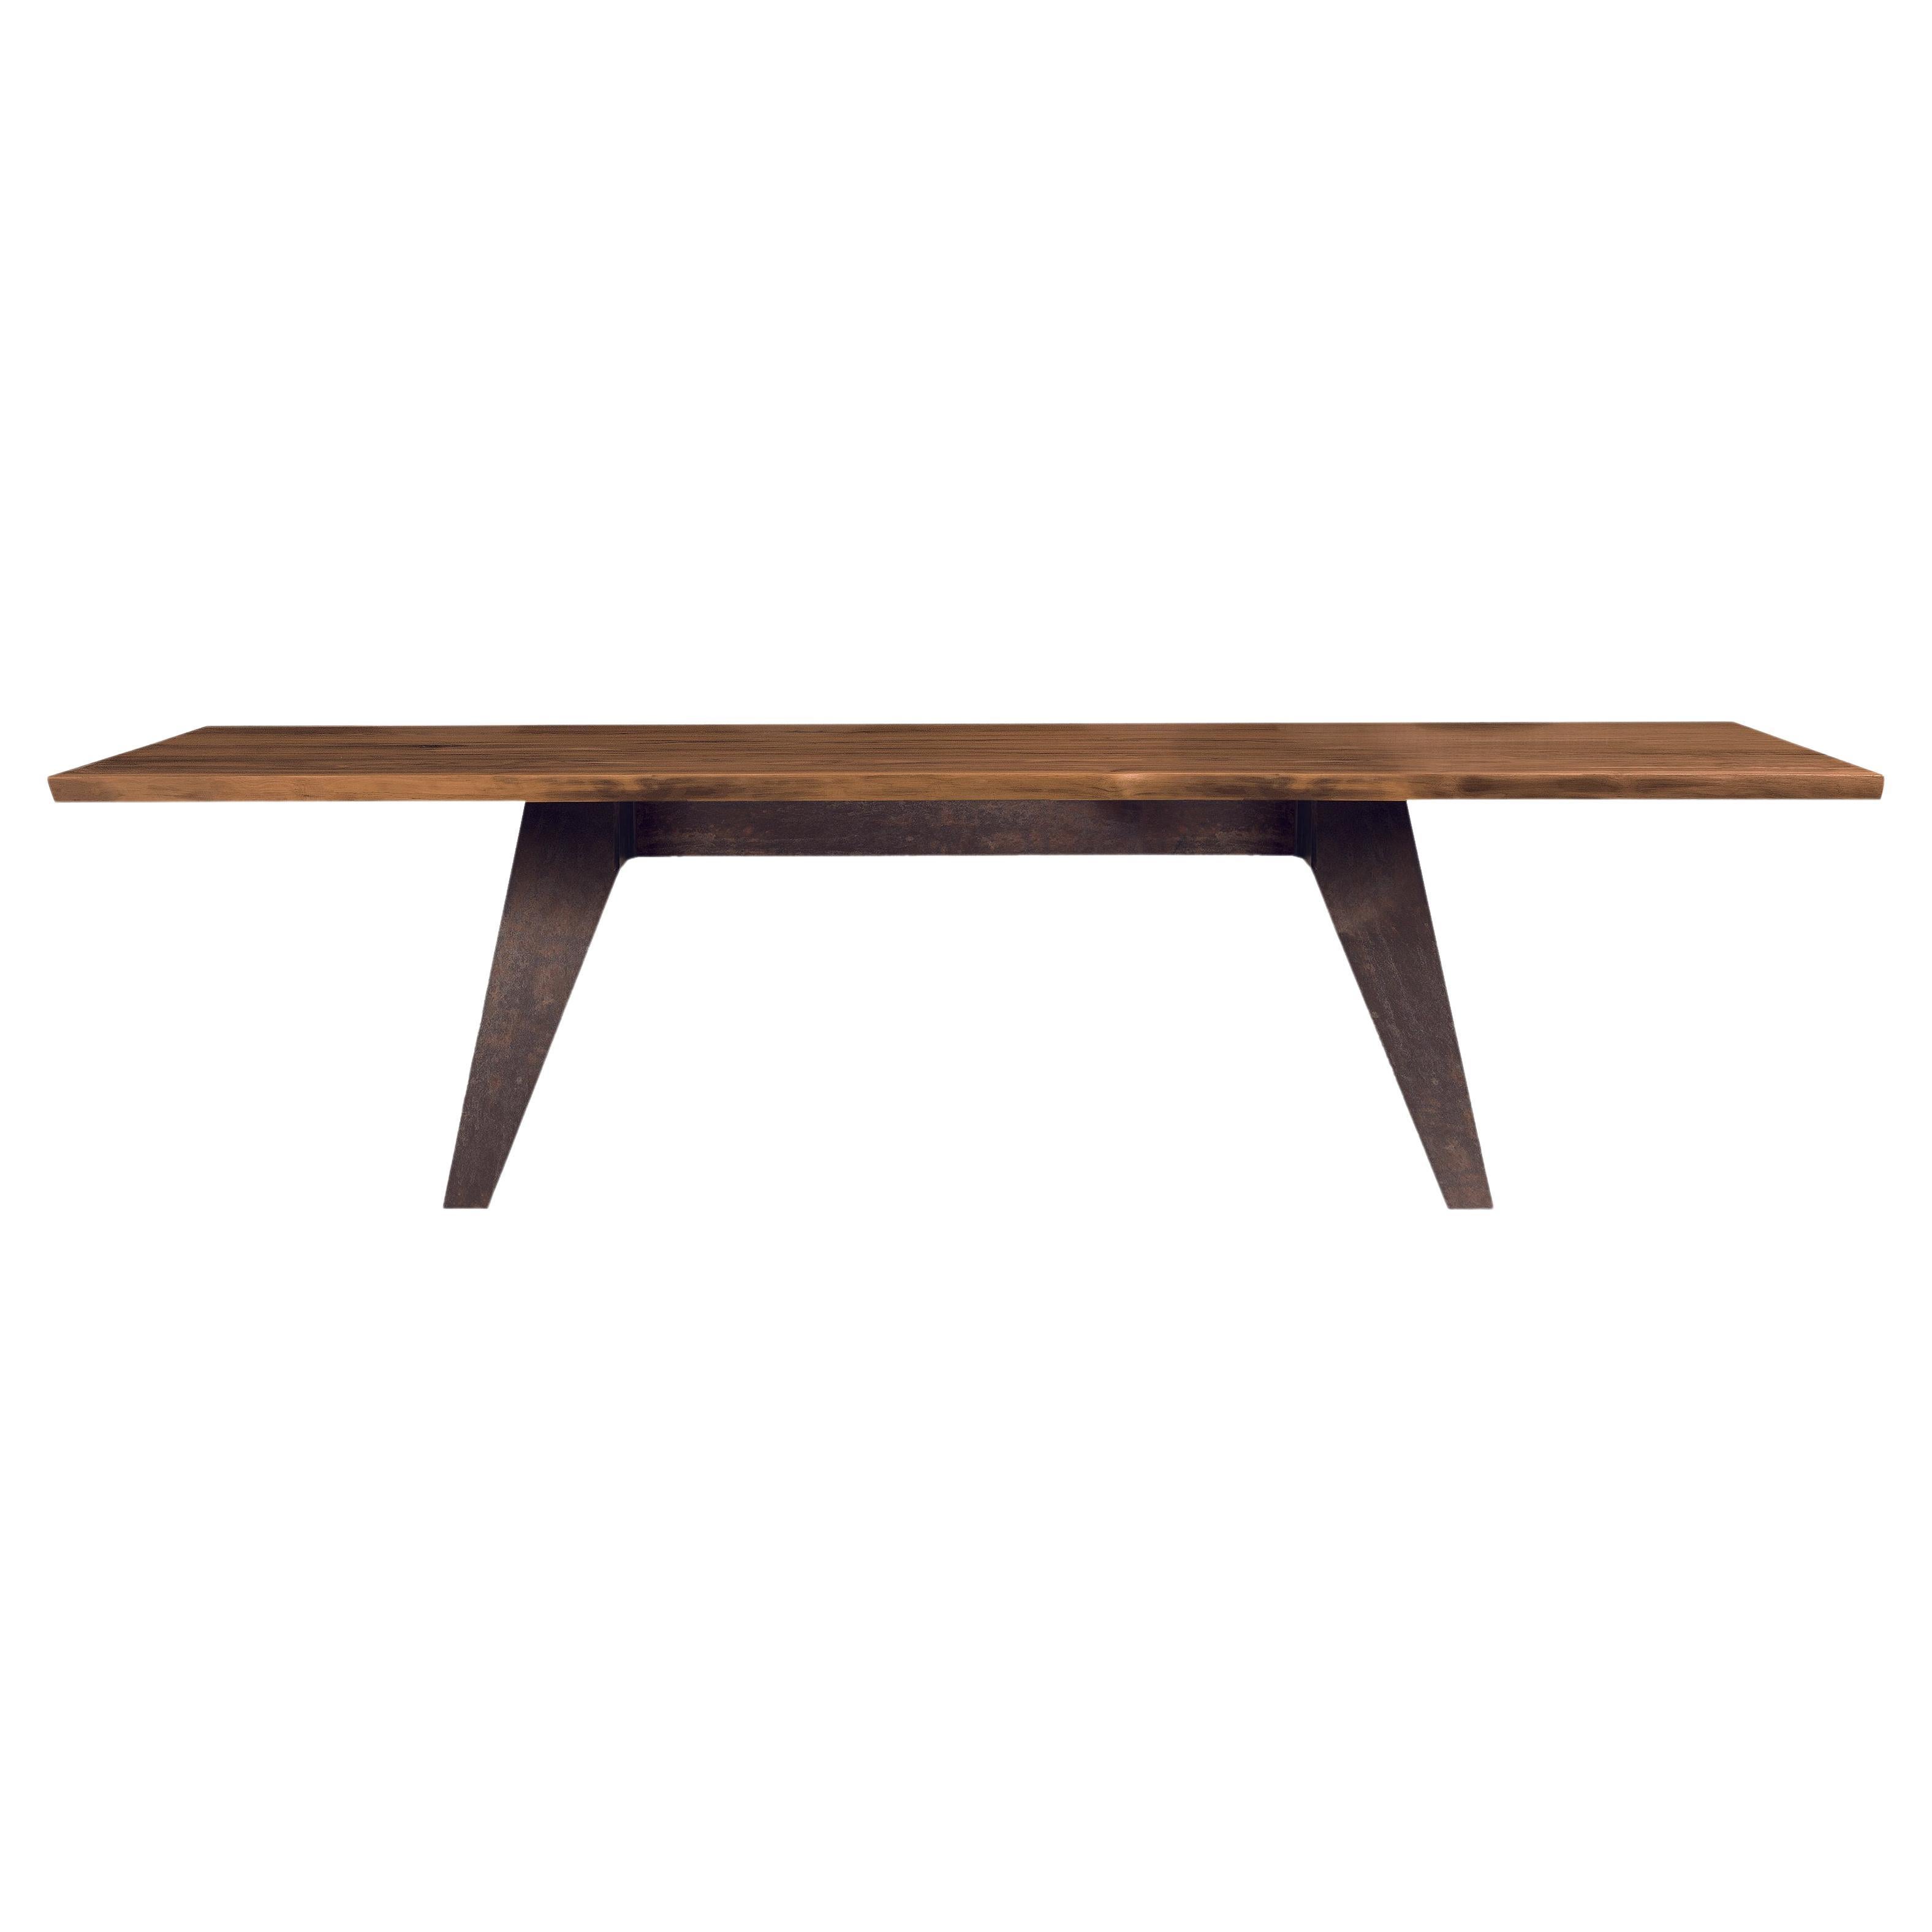 Table Misura en bois massif, Wood Wood en finition naturelle Hand Made, Contemporary